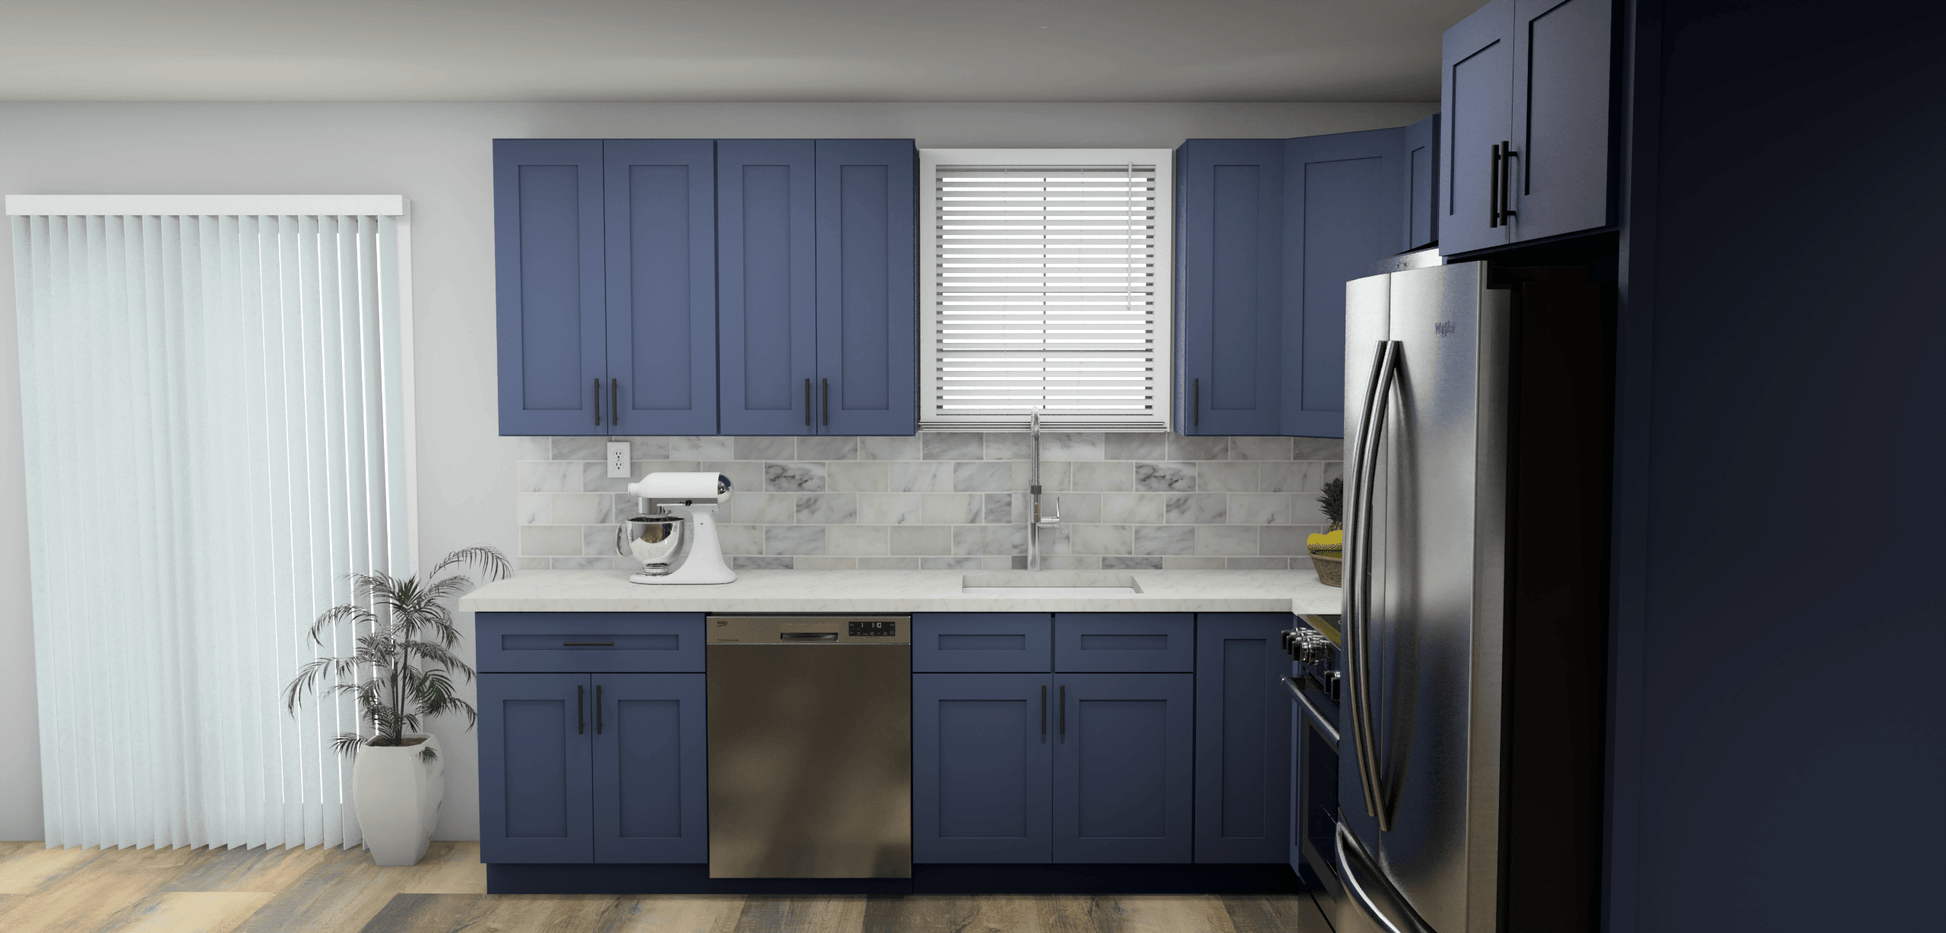 LessCare Danbury Blue 10 x 10 L Shaped Kitchen Side Layout Photo